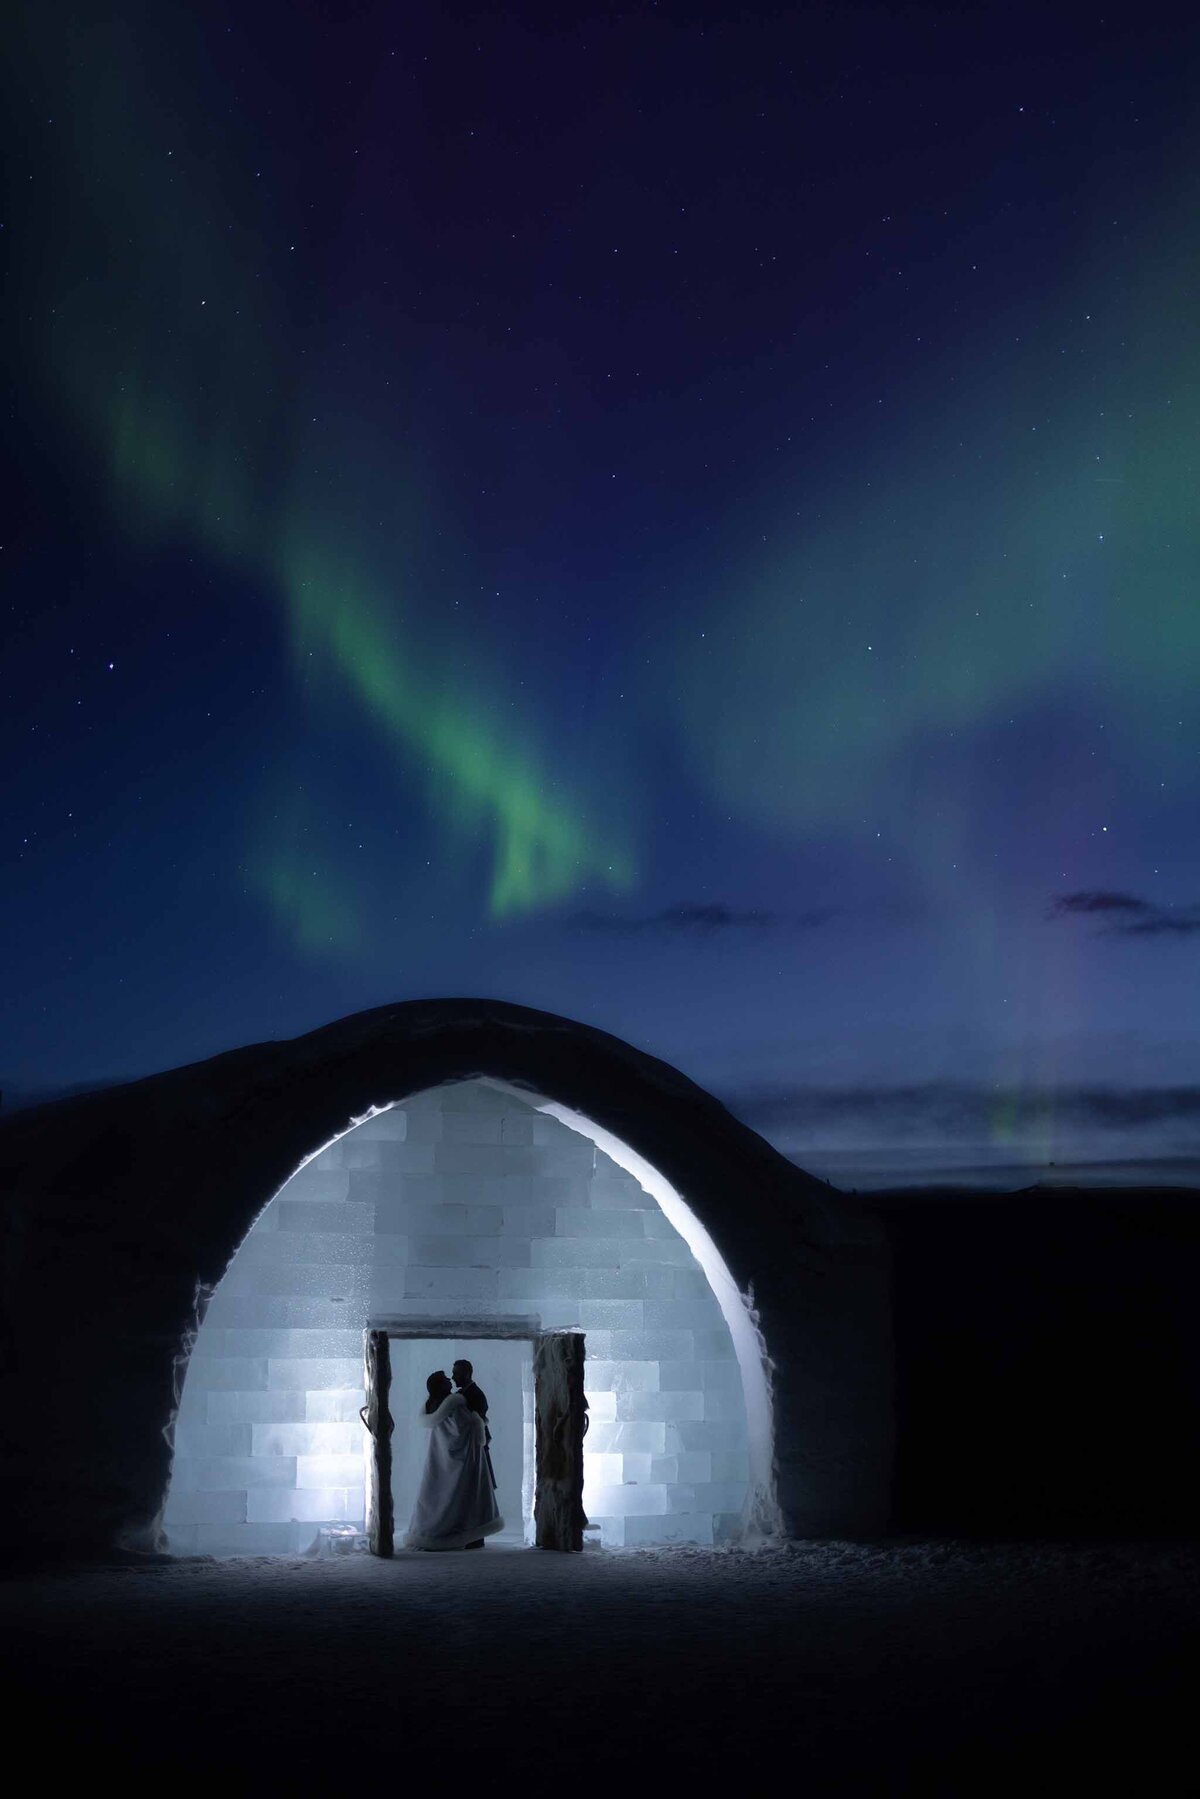 icehotel-weddings-winter-weddings-vinterbröllop-fotograf-kiruna-photographer-wedding-photographer004004